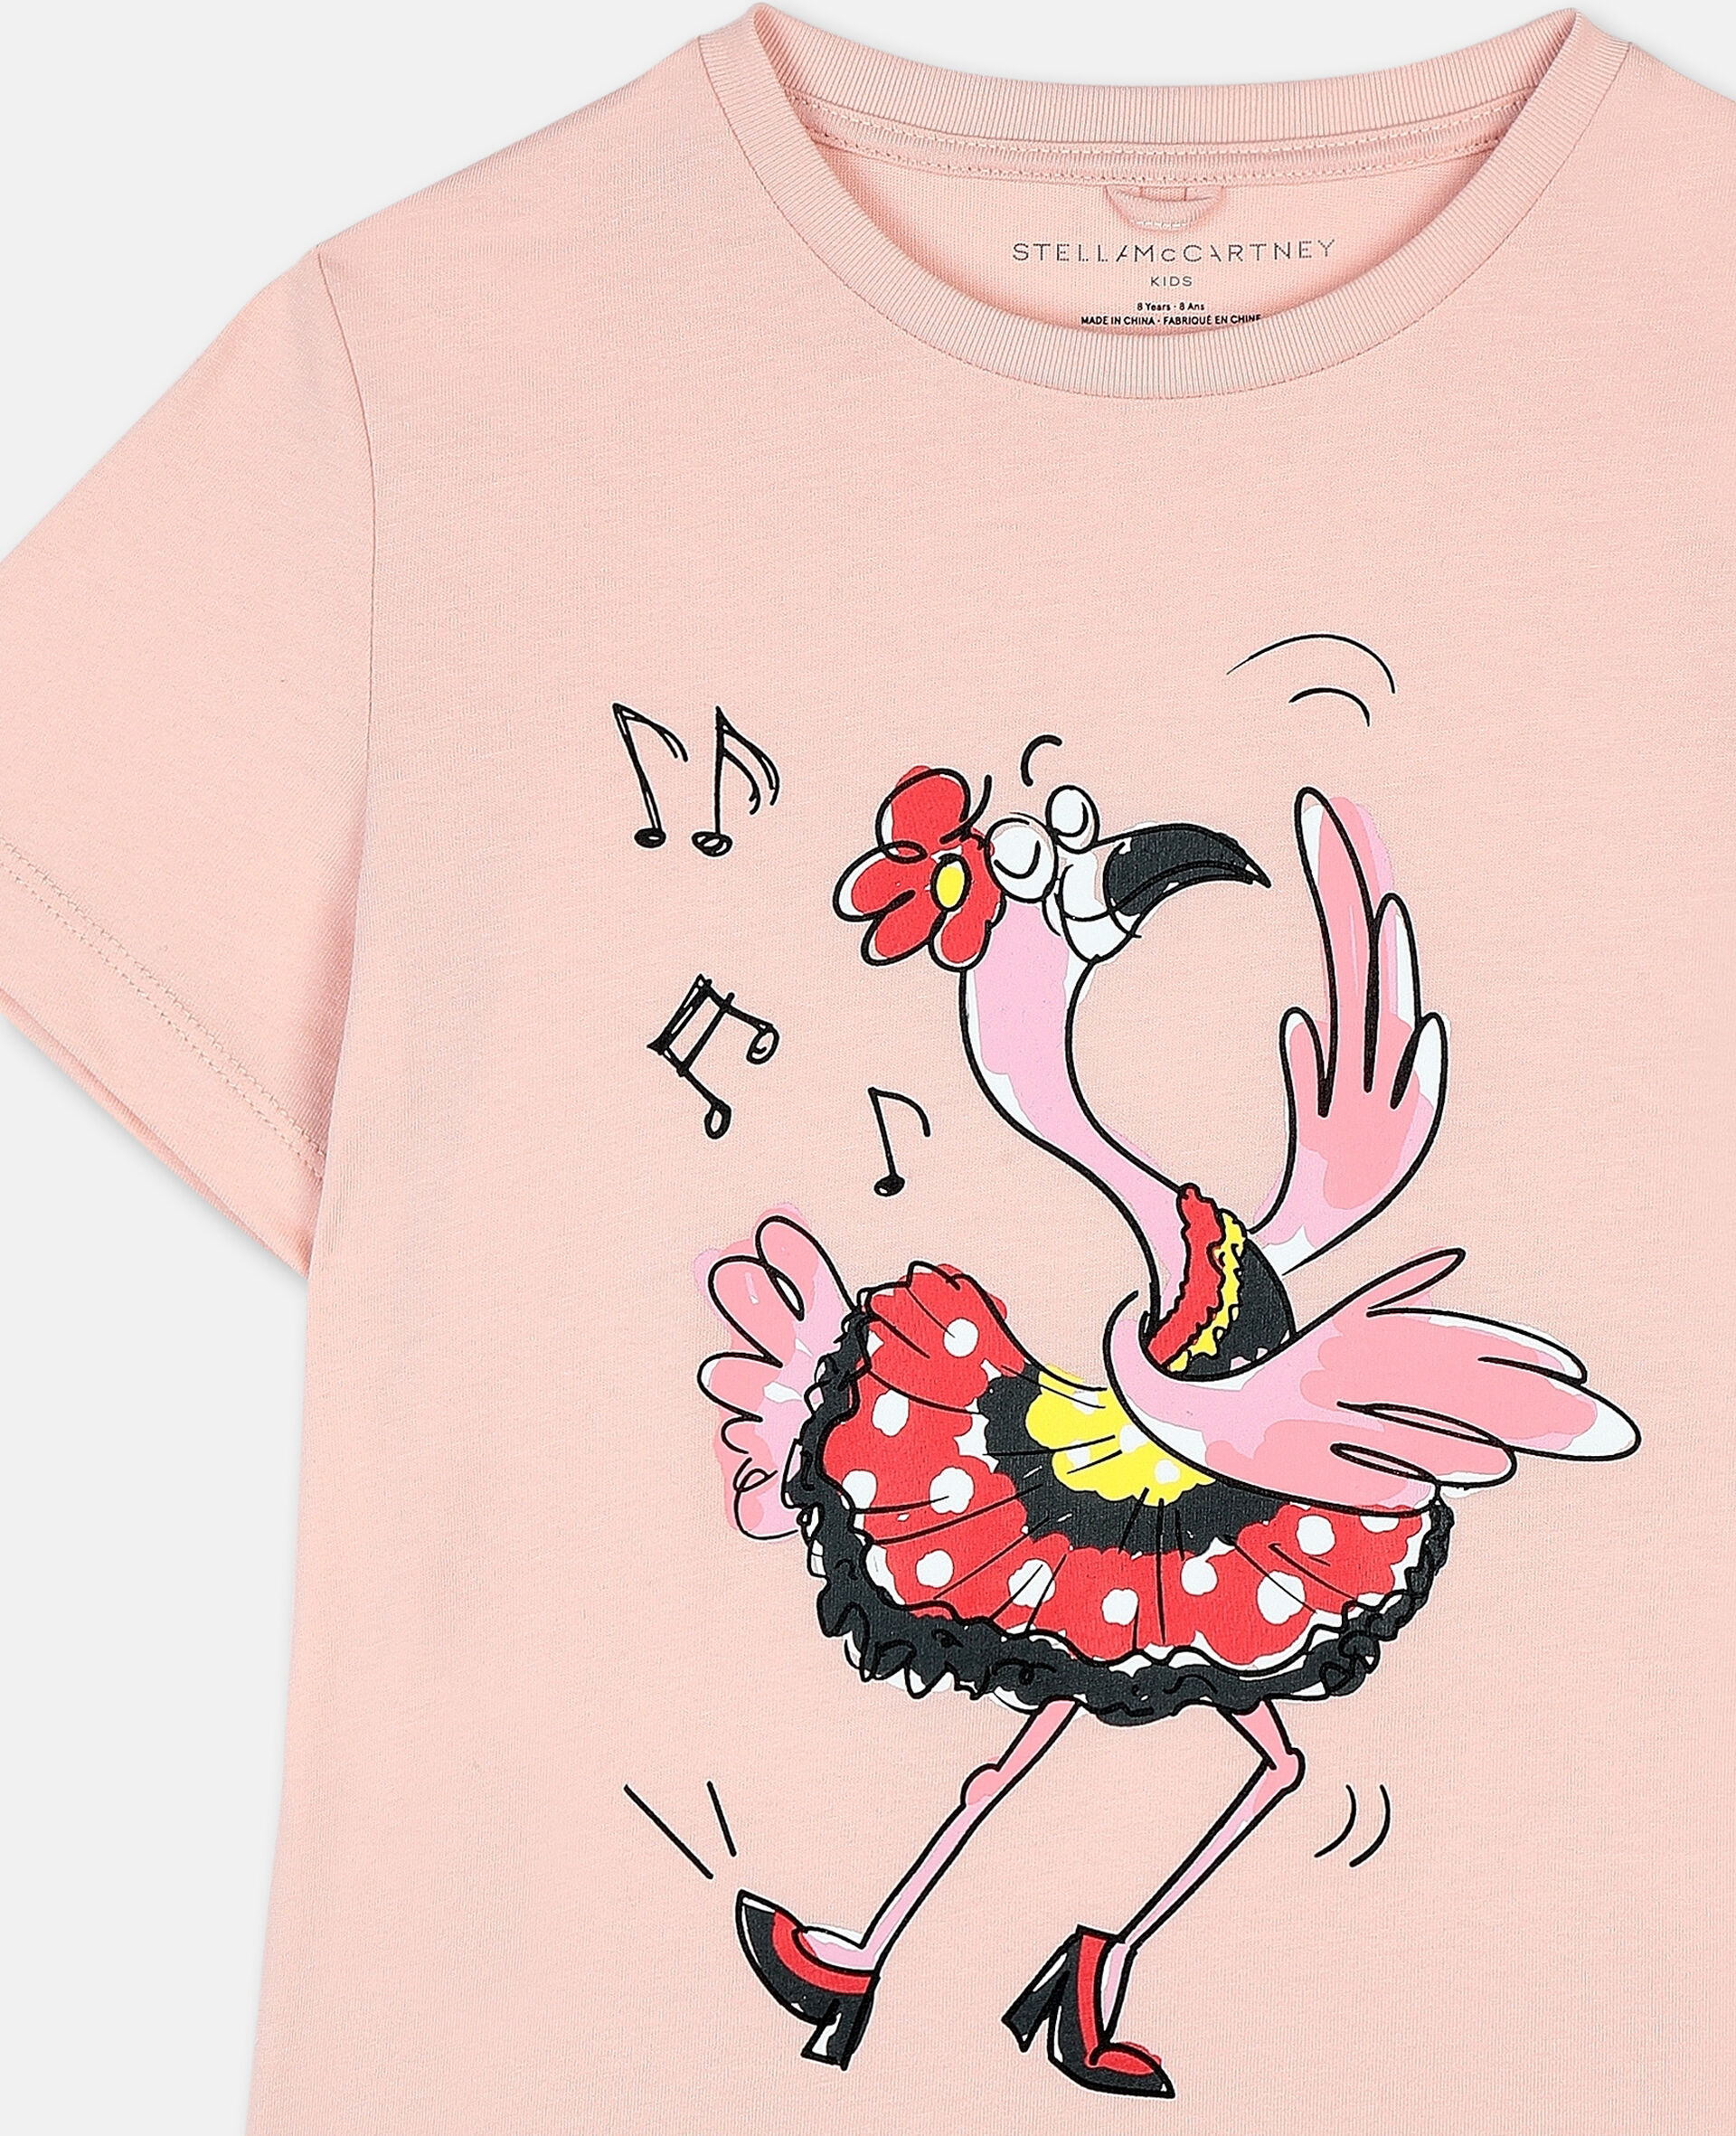 Dancing Flamingo Cotton T-shirt-Pink-large image number 1